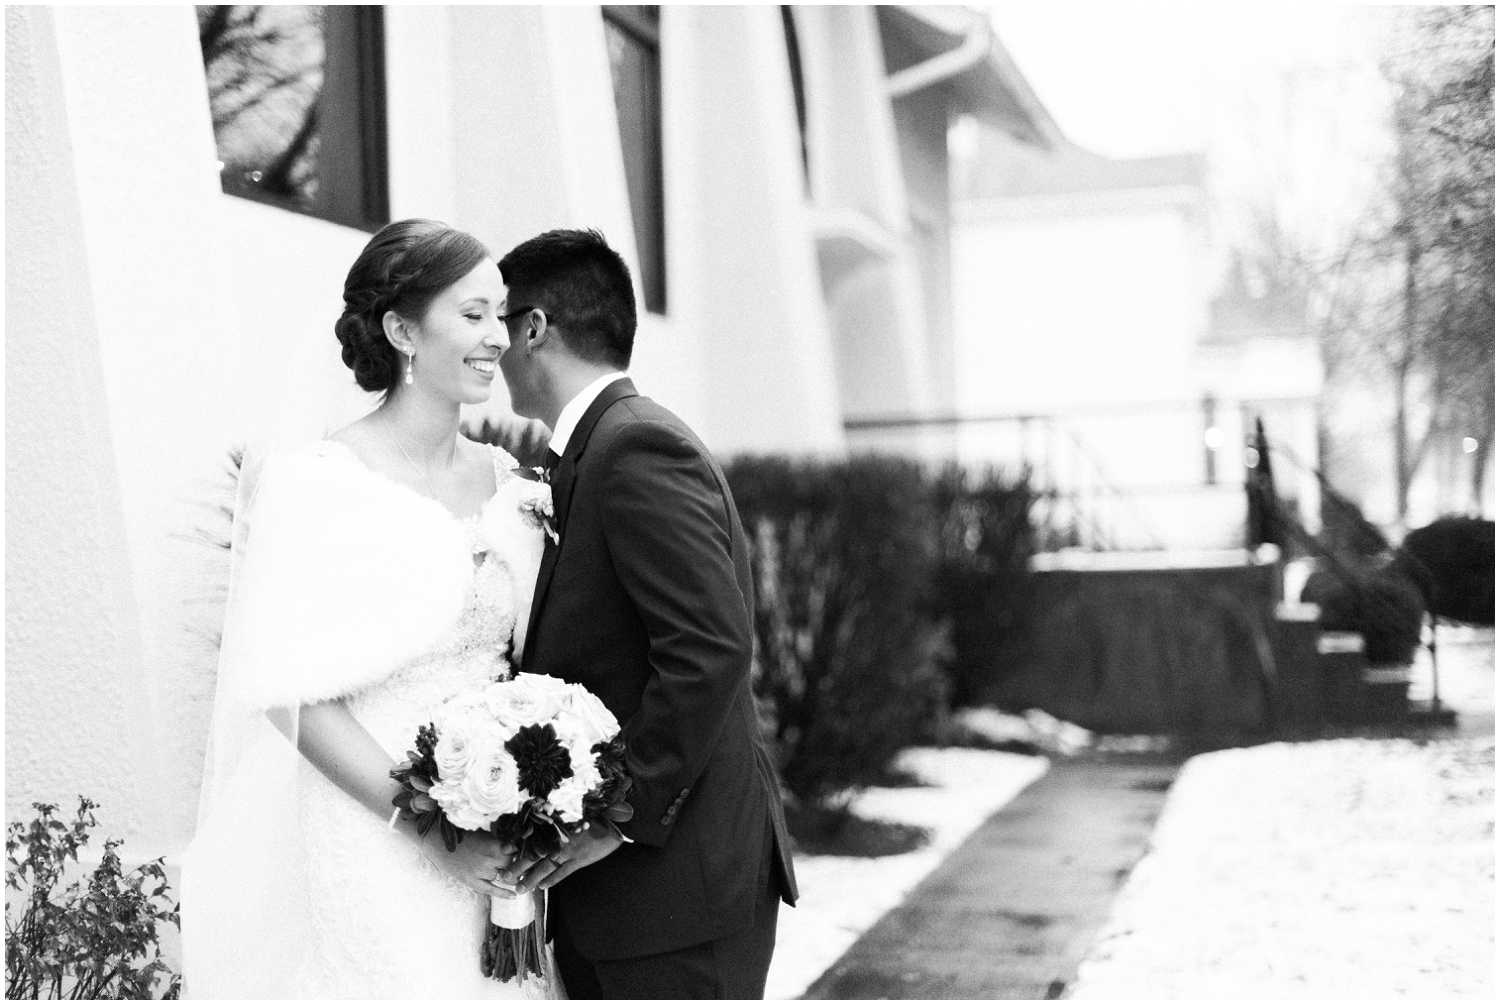 Dayton Wedding Photographers | Chelsea Hall Photography | www.chelsea-hall.com